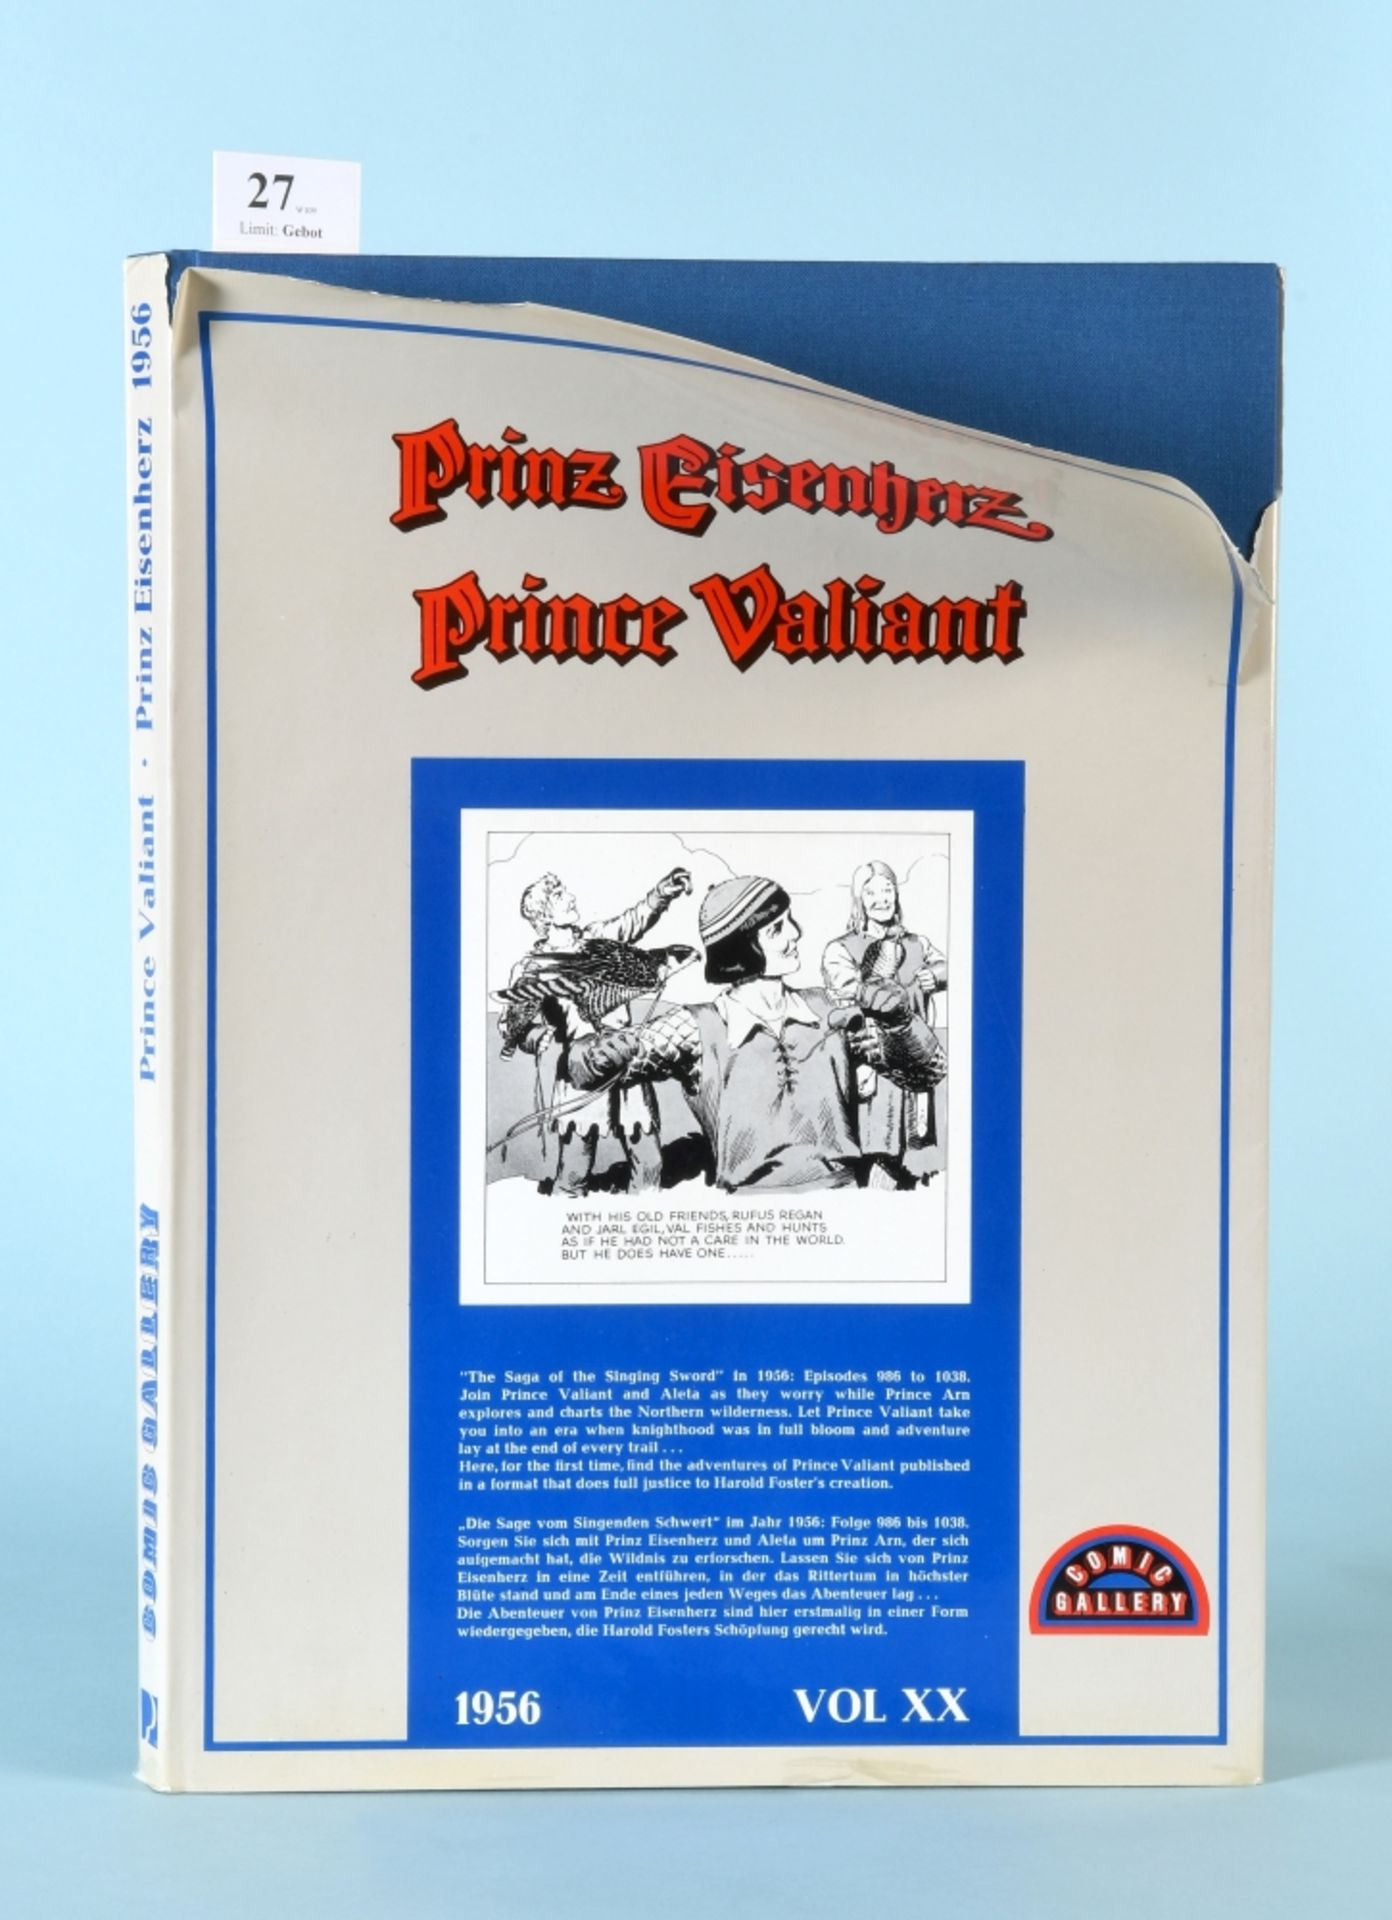 Foster, Hal "Prinz Eisenherz - Prince Valiant"